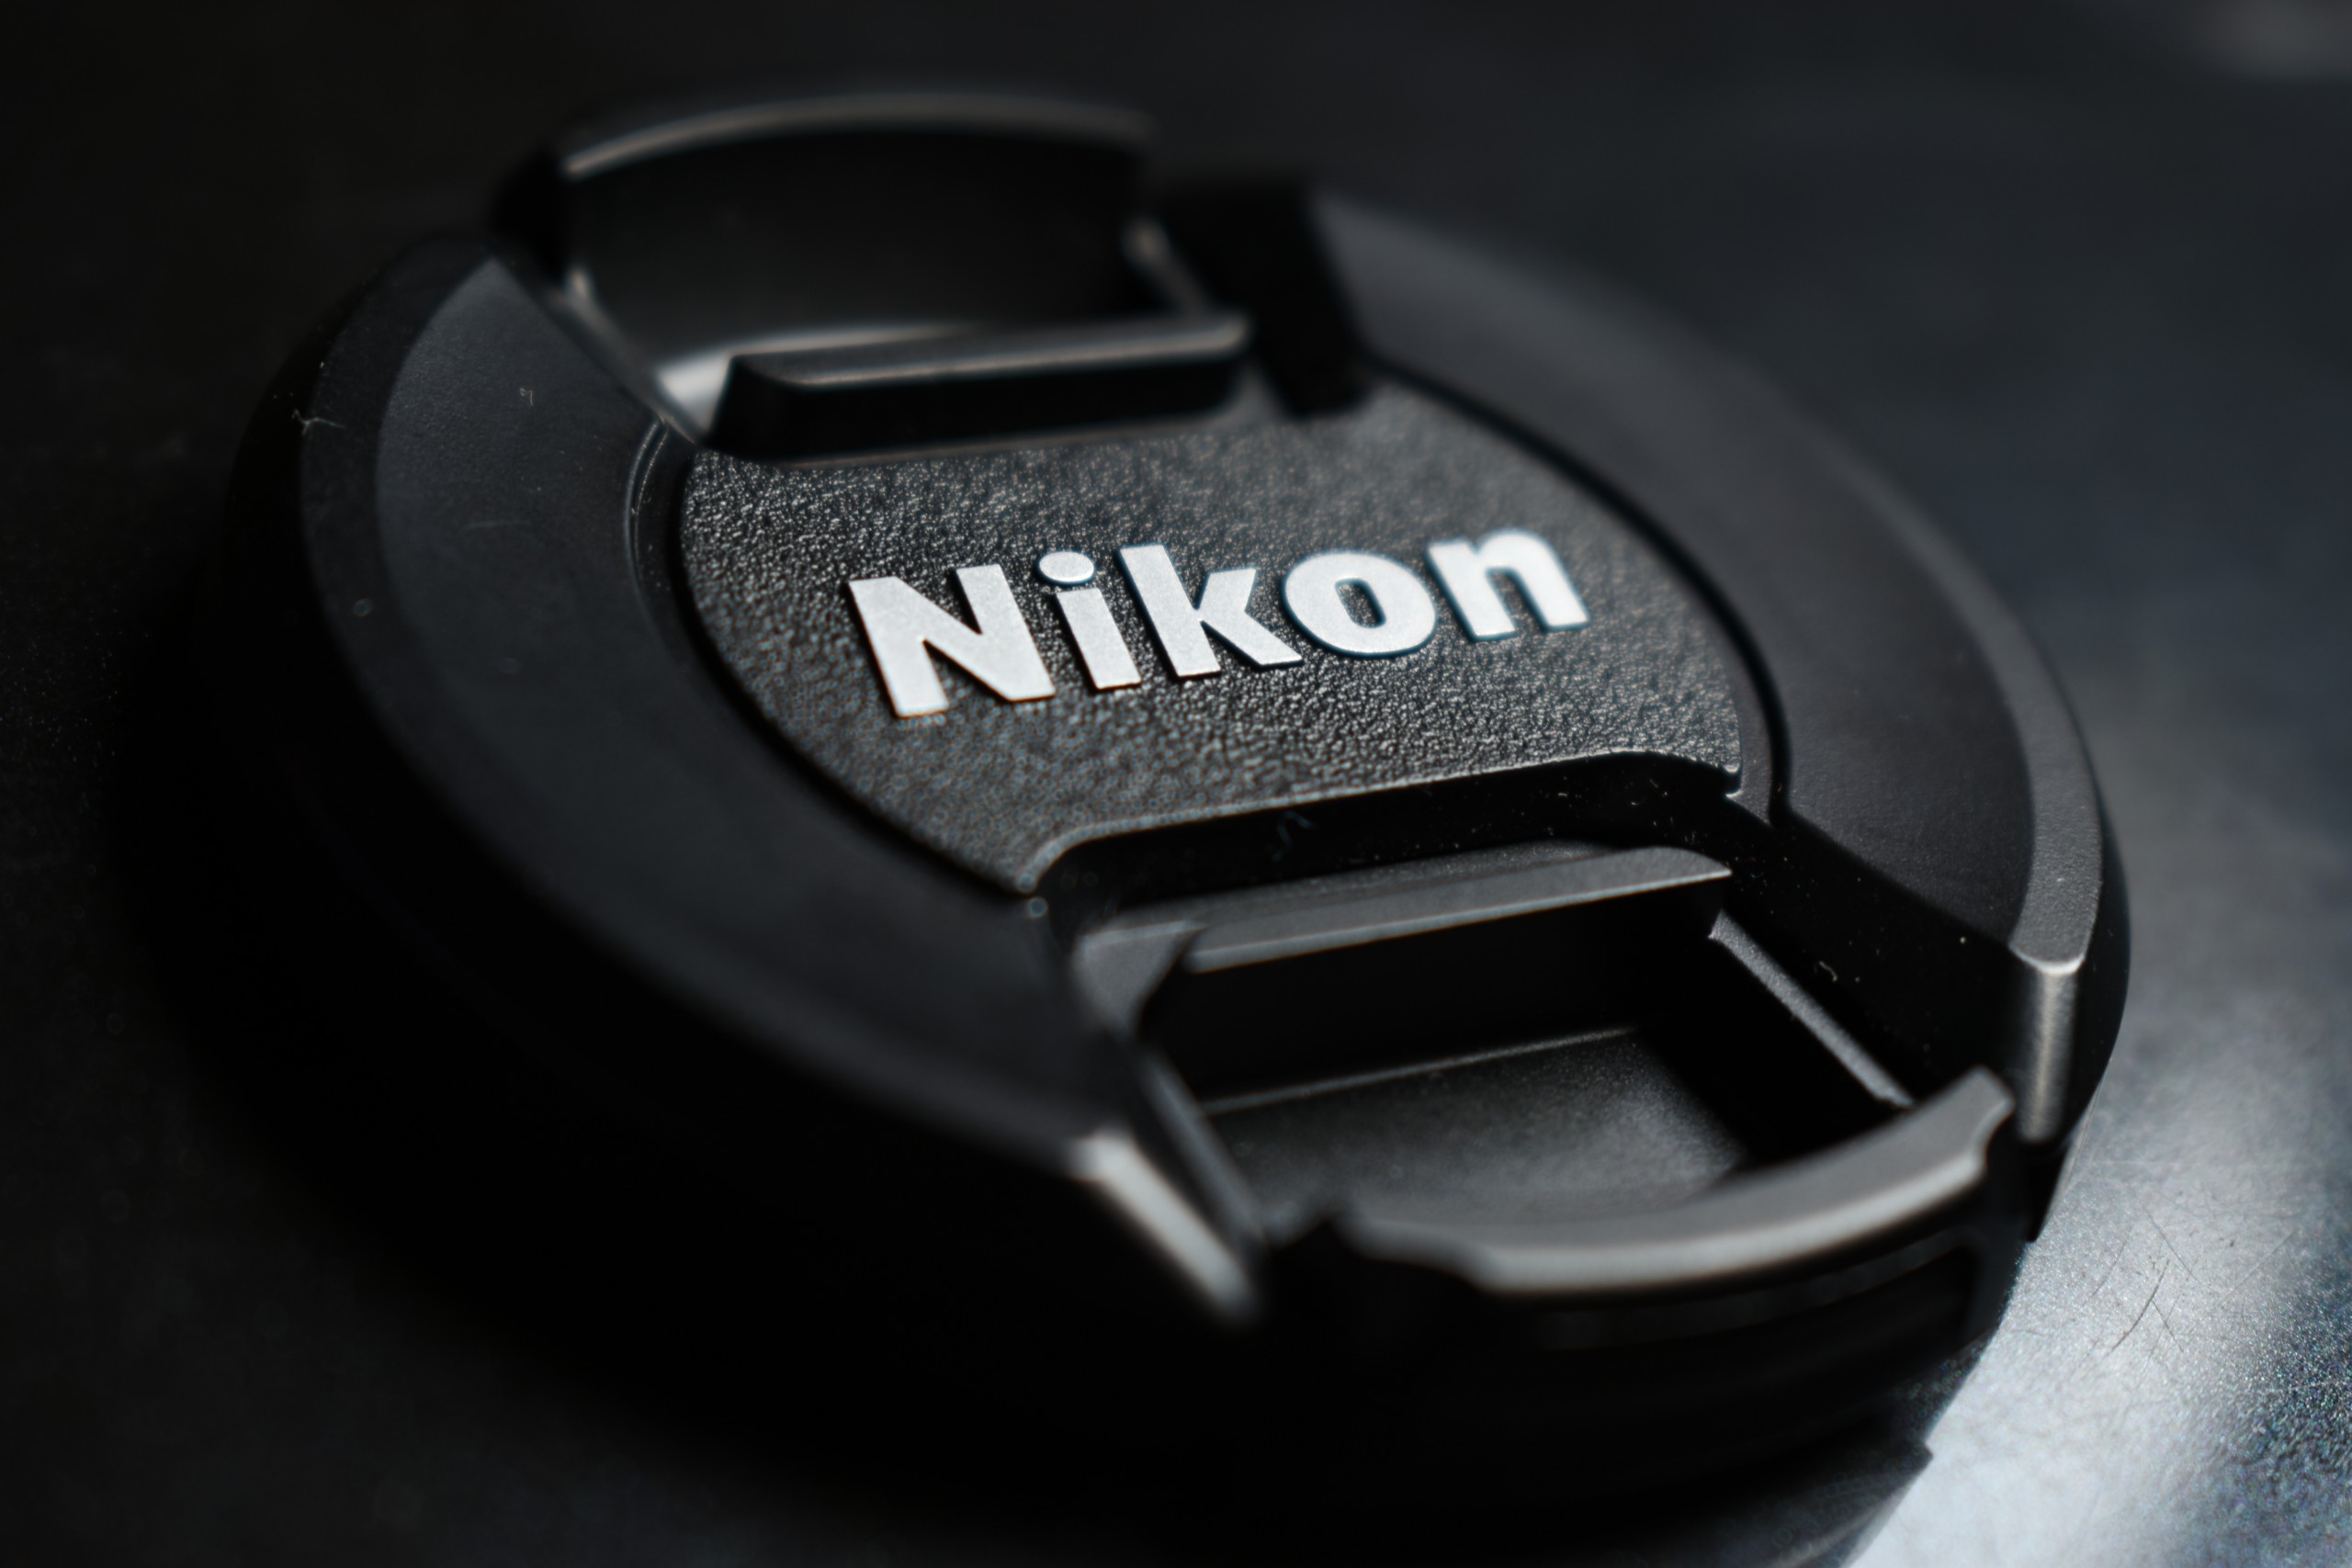 Nikon lens cap